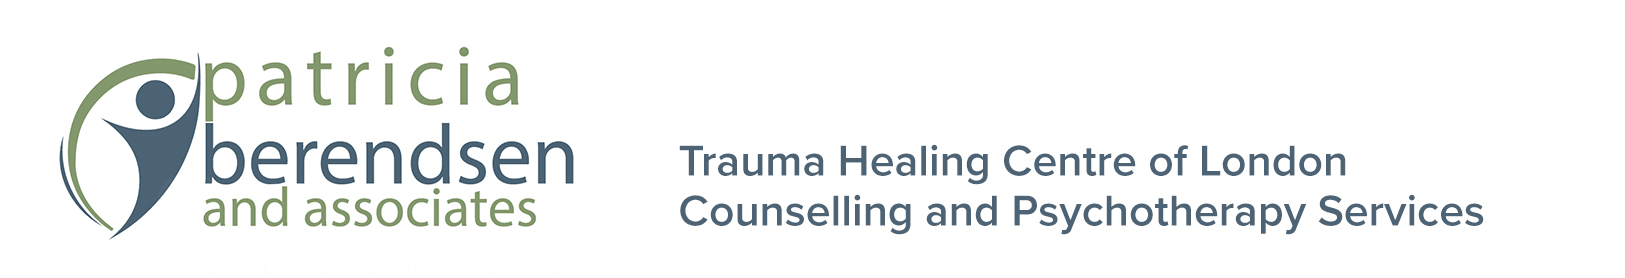 Patricia Berendsen Trauma Healing Centre London